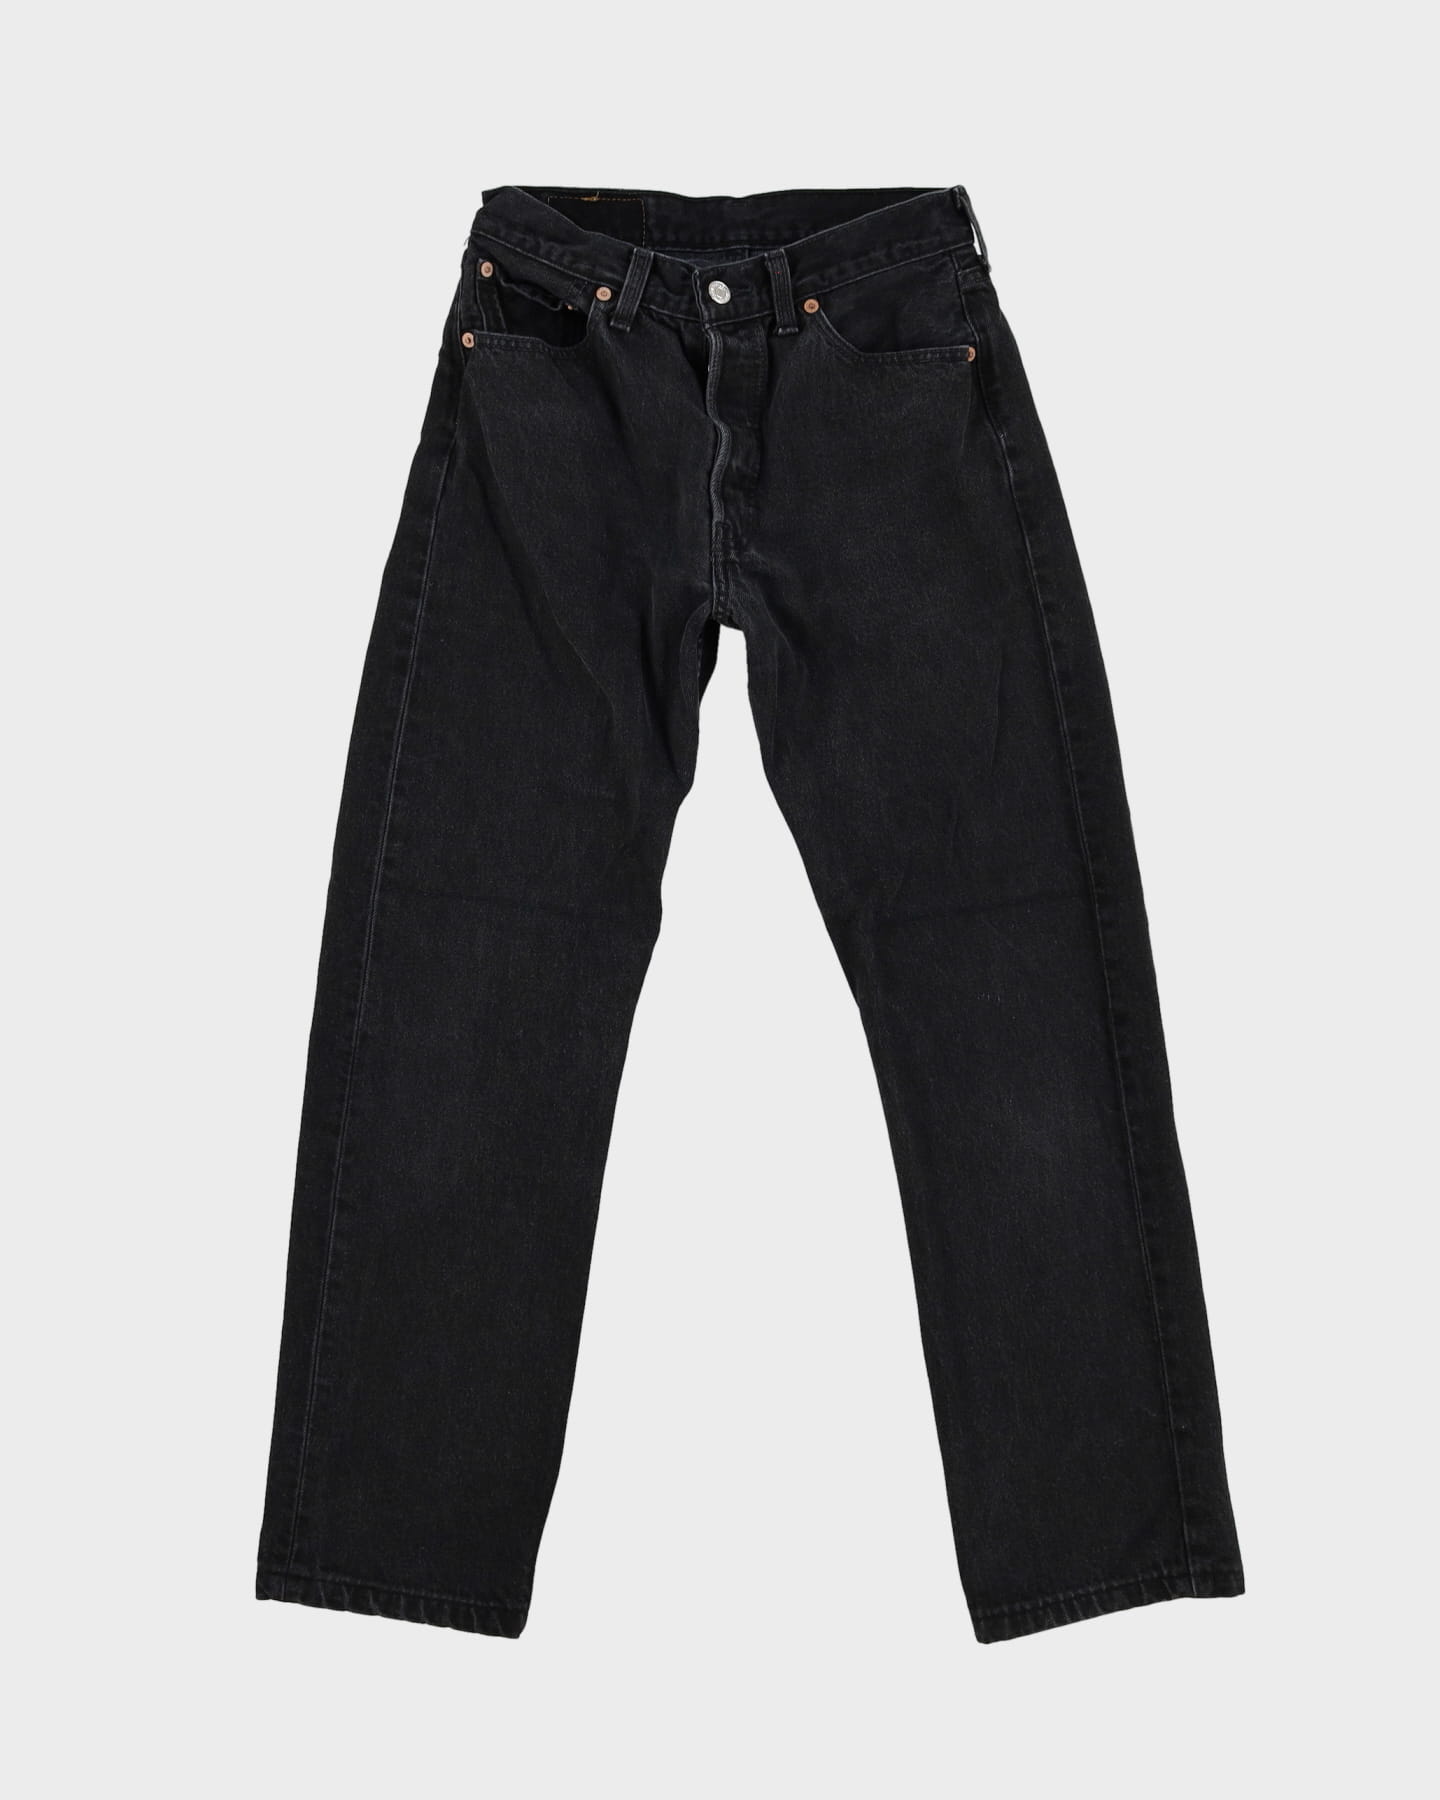 Vintage 90s Levi's 501 Faded Black Jeans - W28 L29